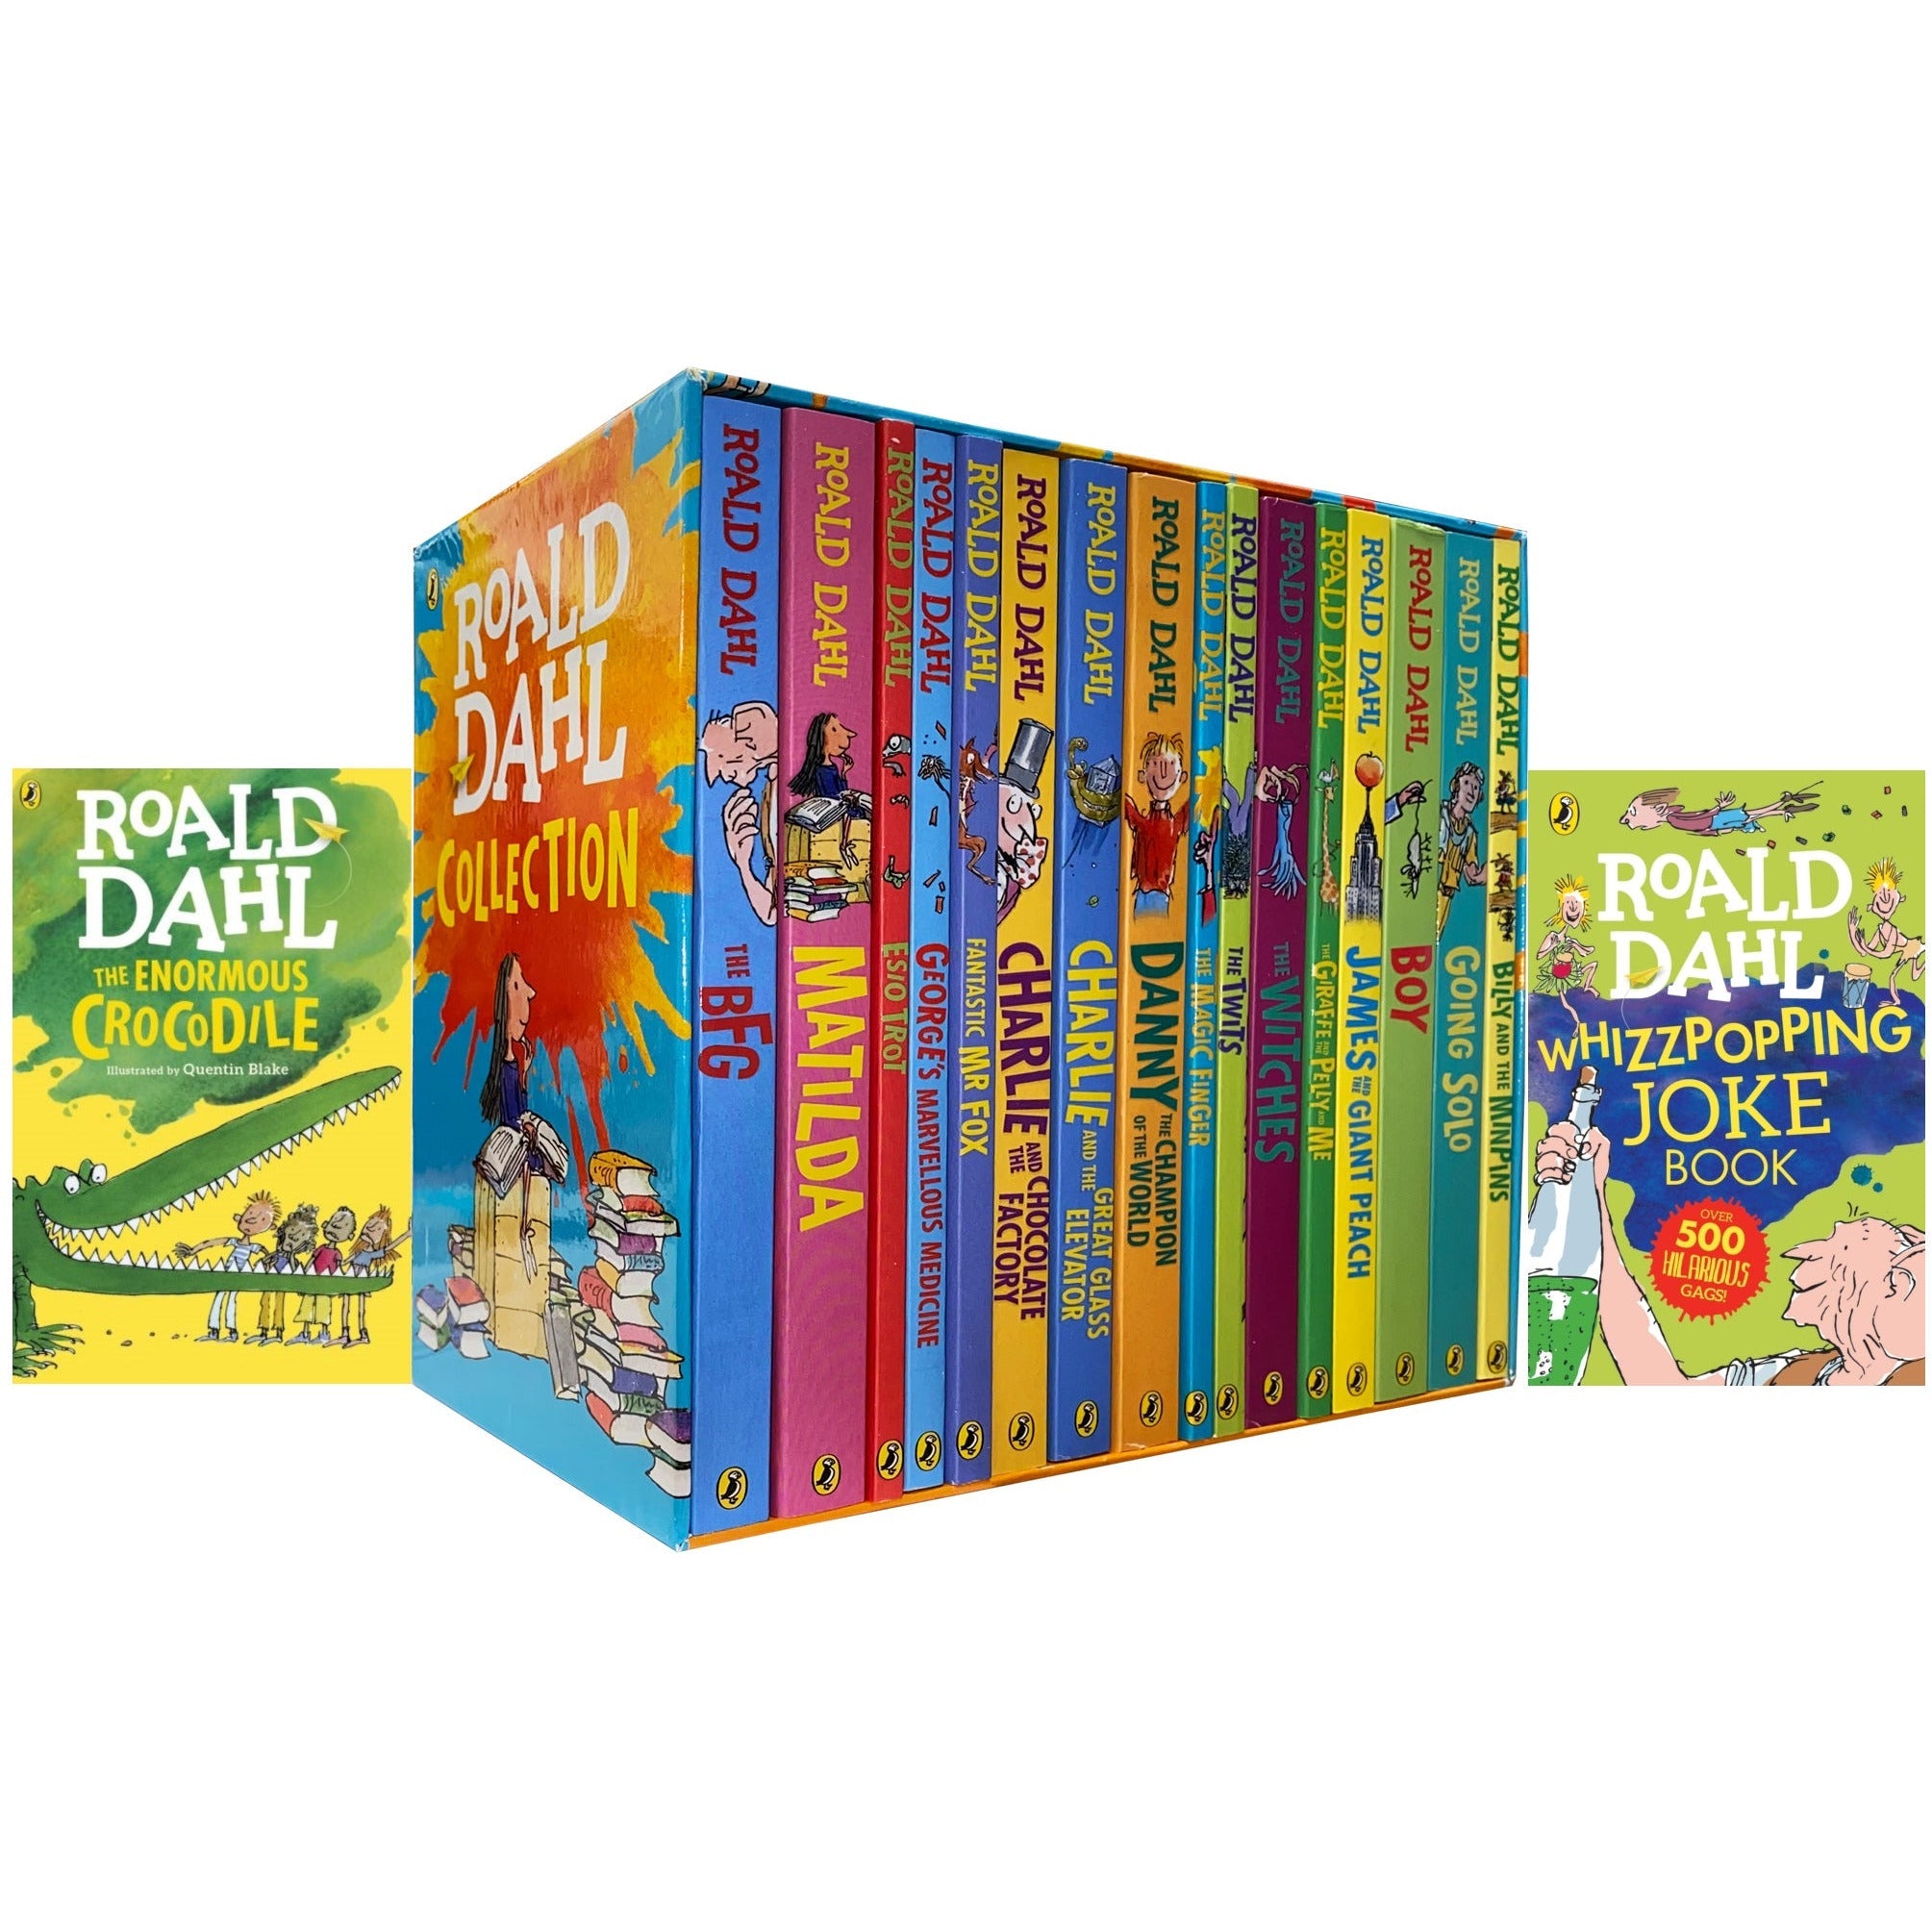 Roald Dahl Collection 18 Books Set (Original Edition) Inc The 